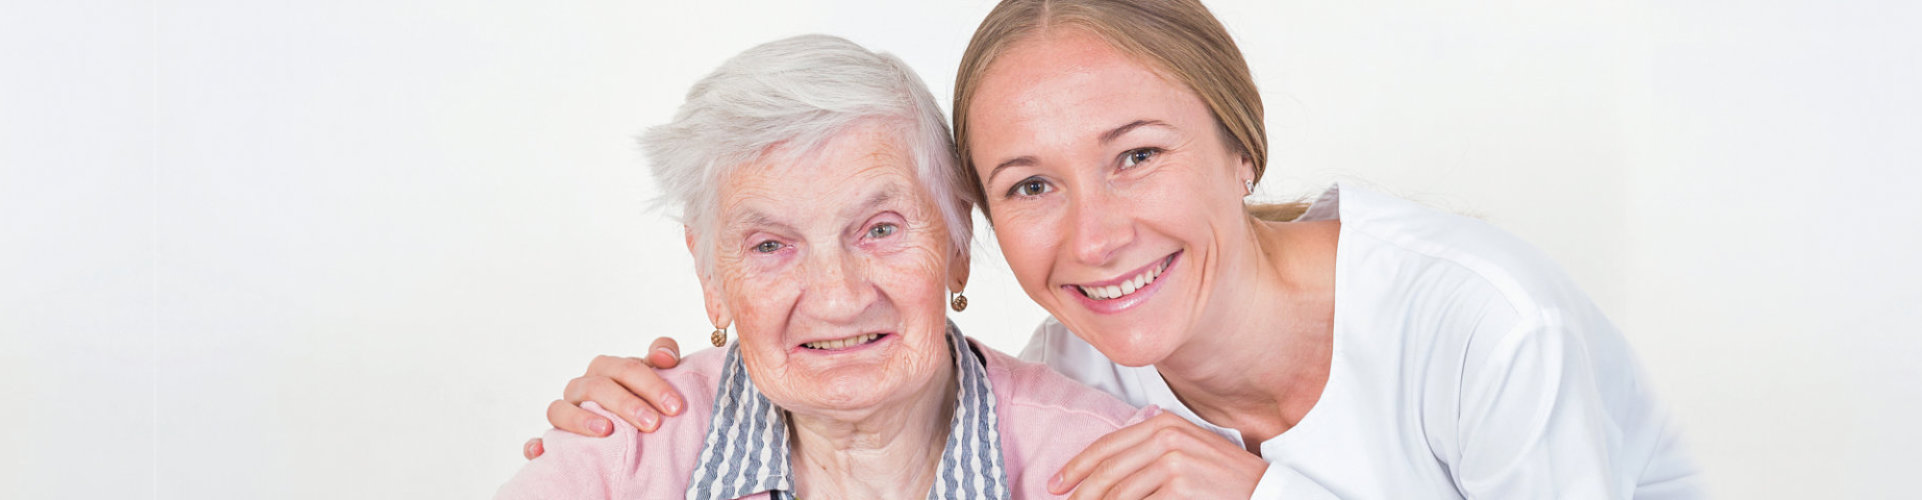 caregiver and senior woman